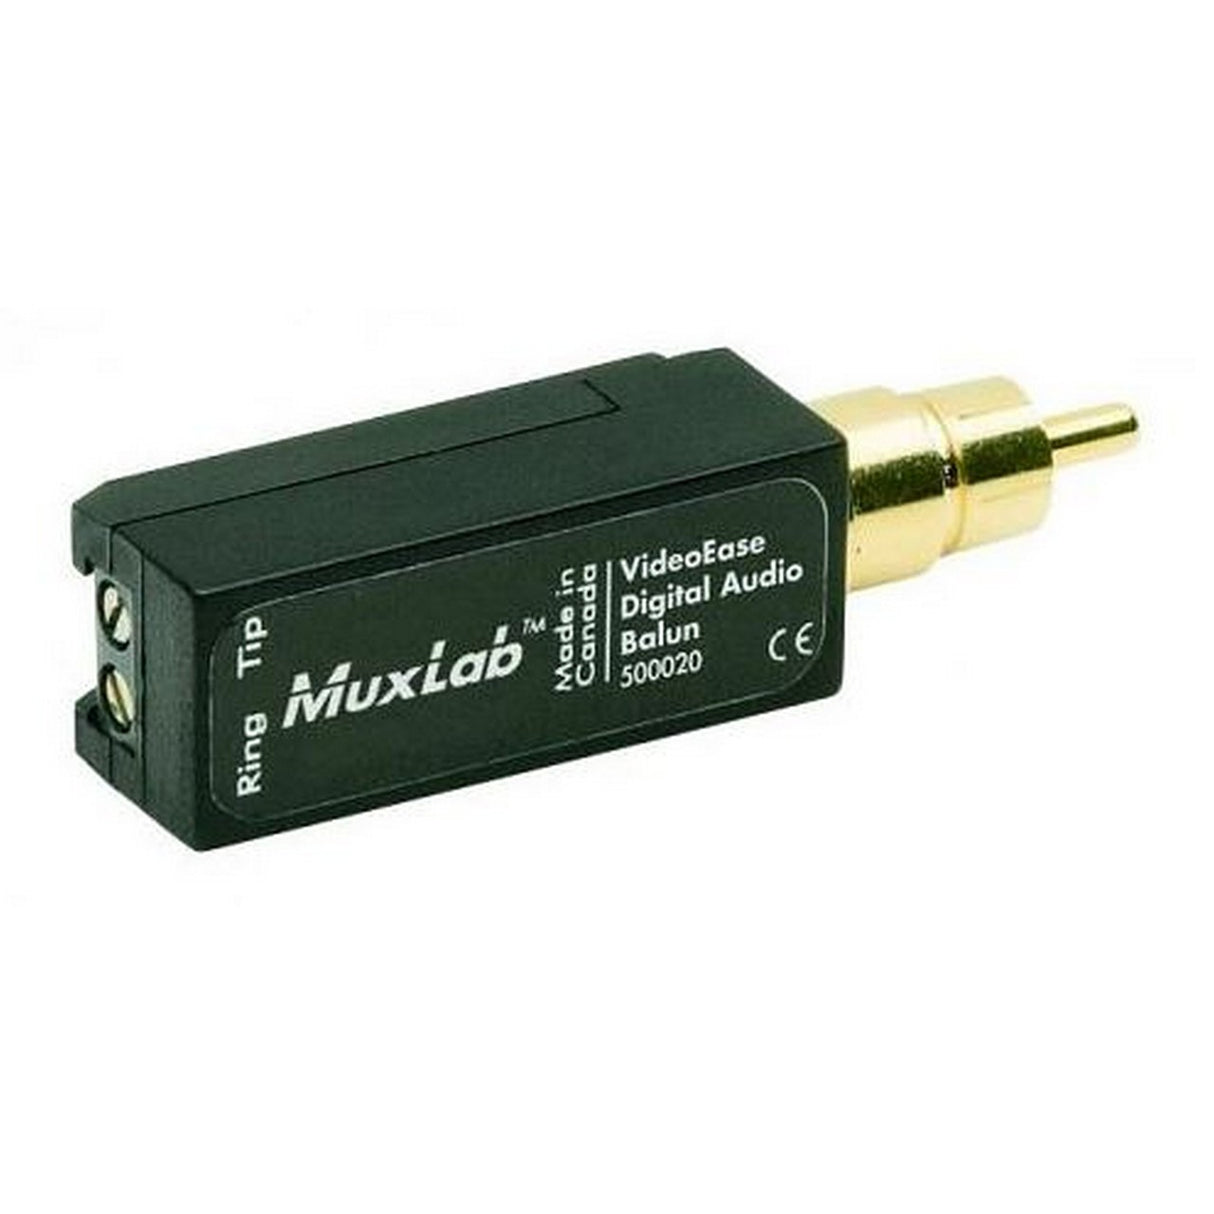 MuxLab 500020 | Digital Audio Balun